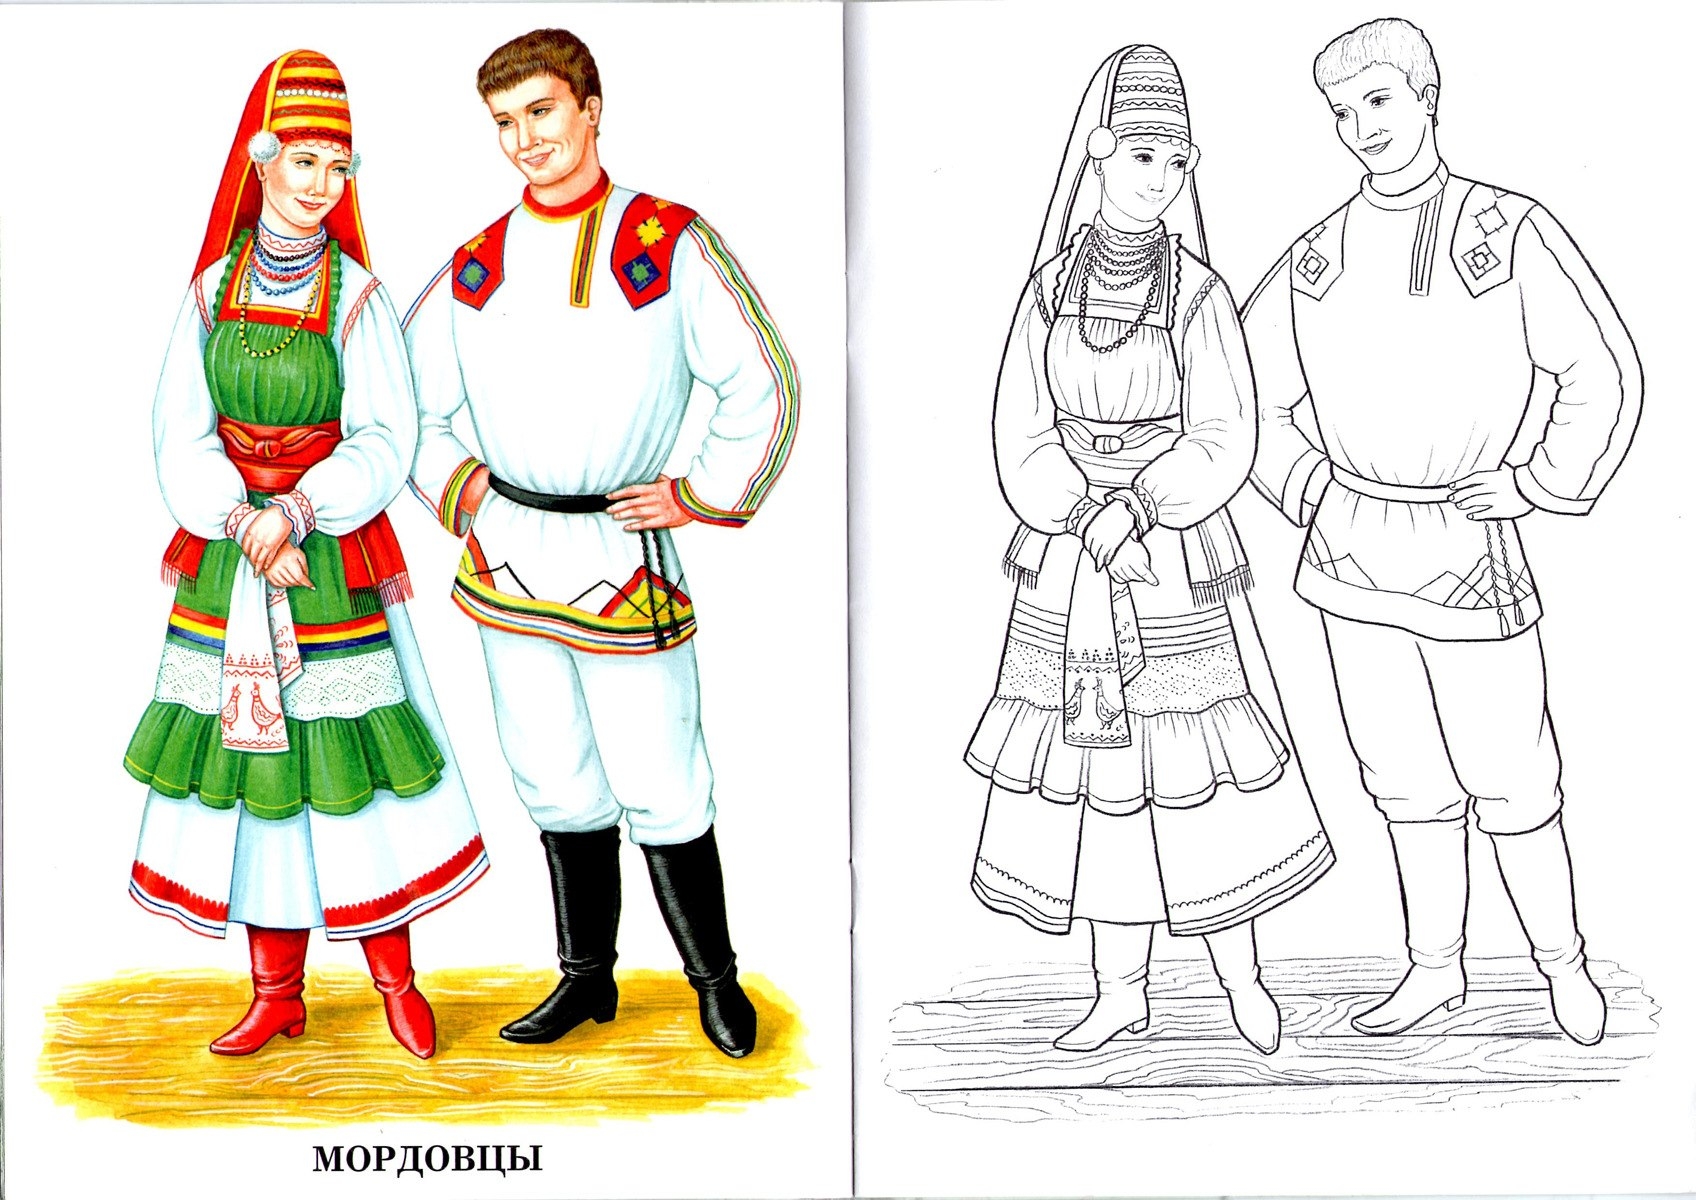 Mordovian national costume #4